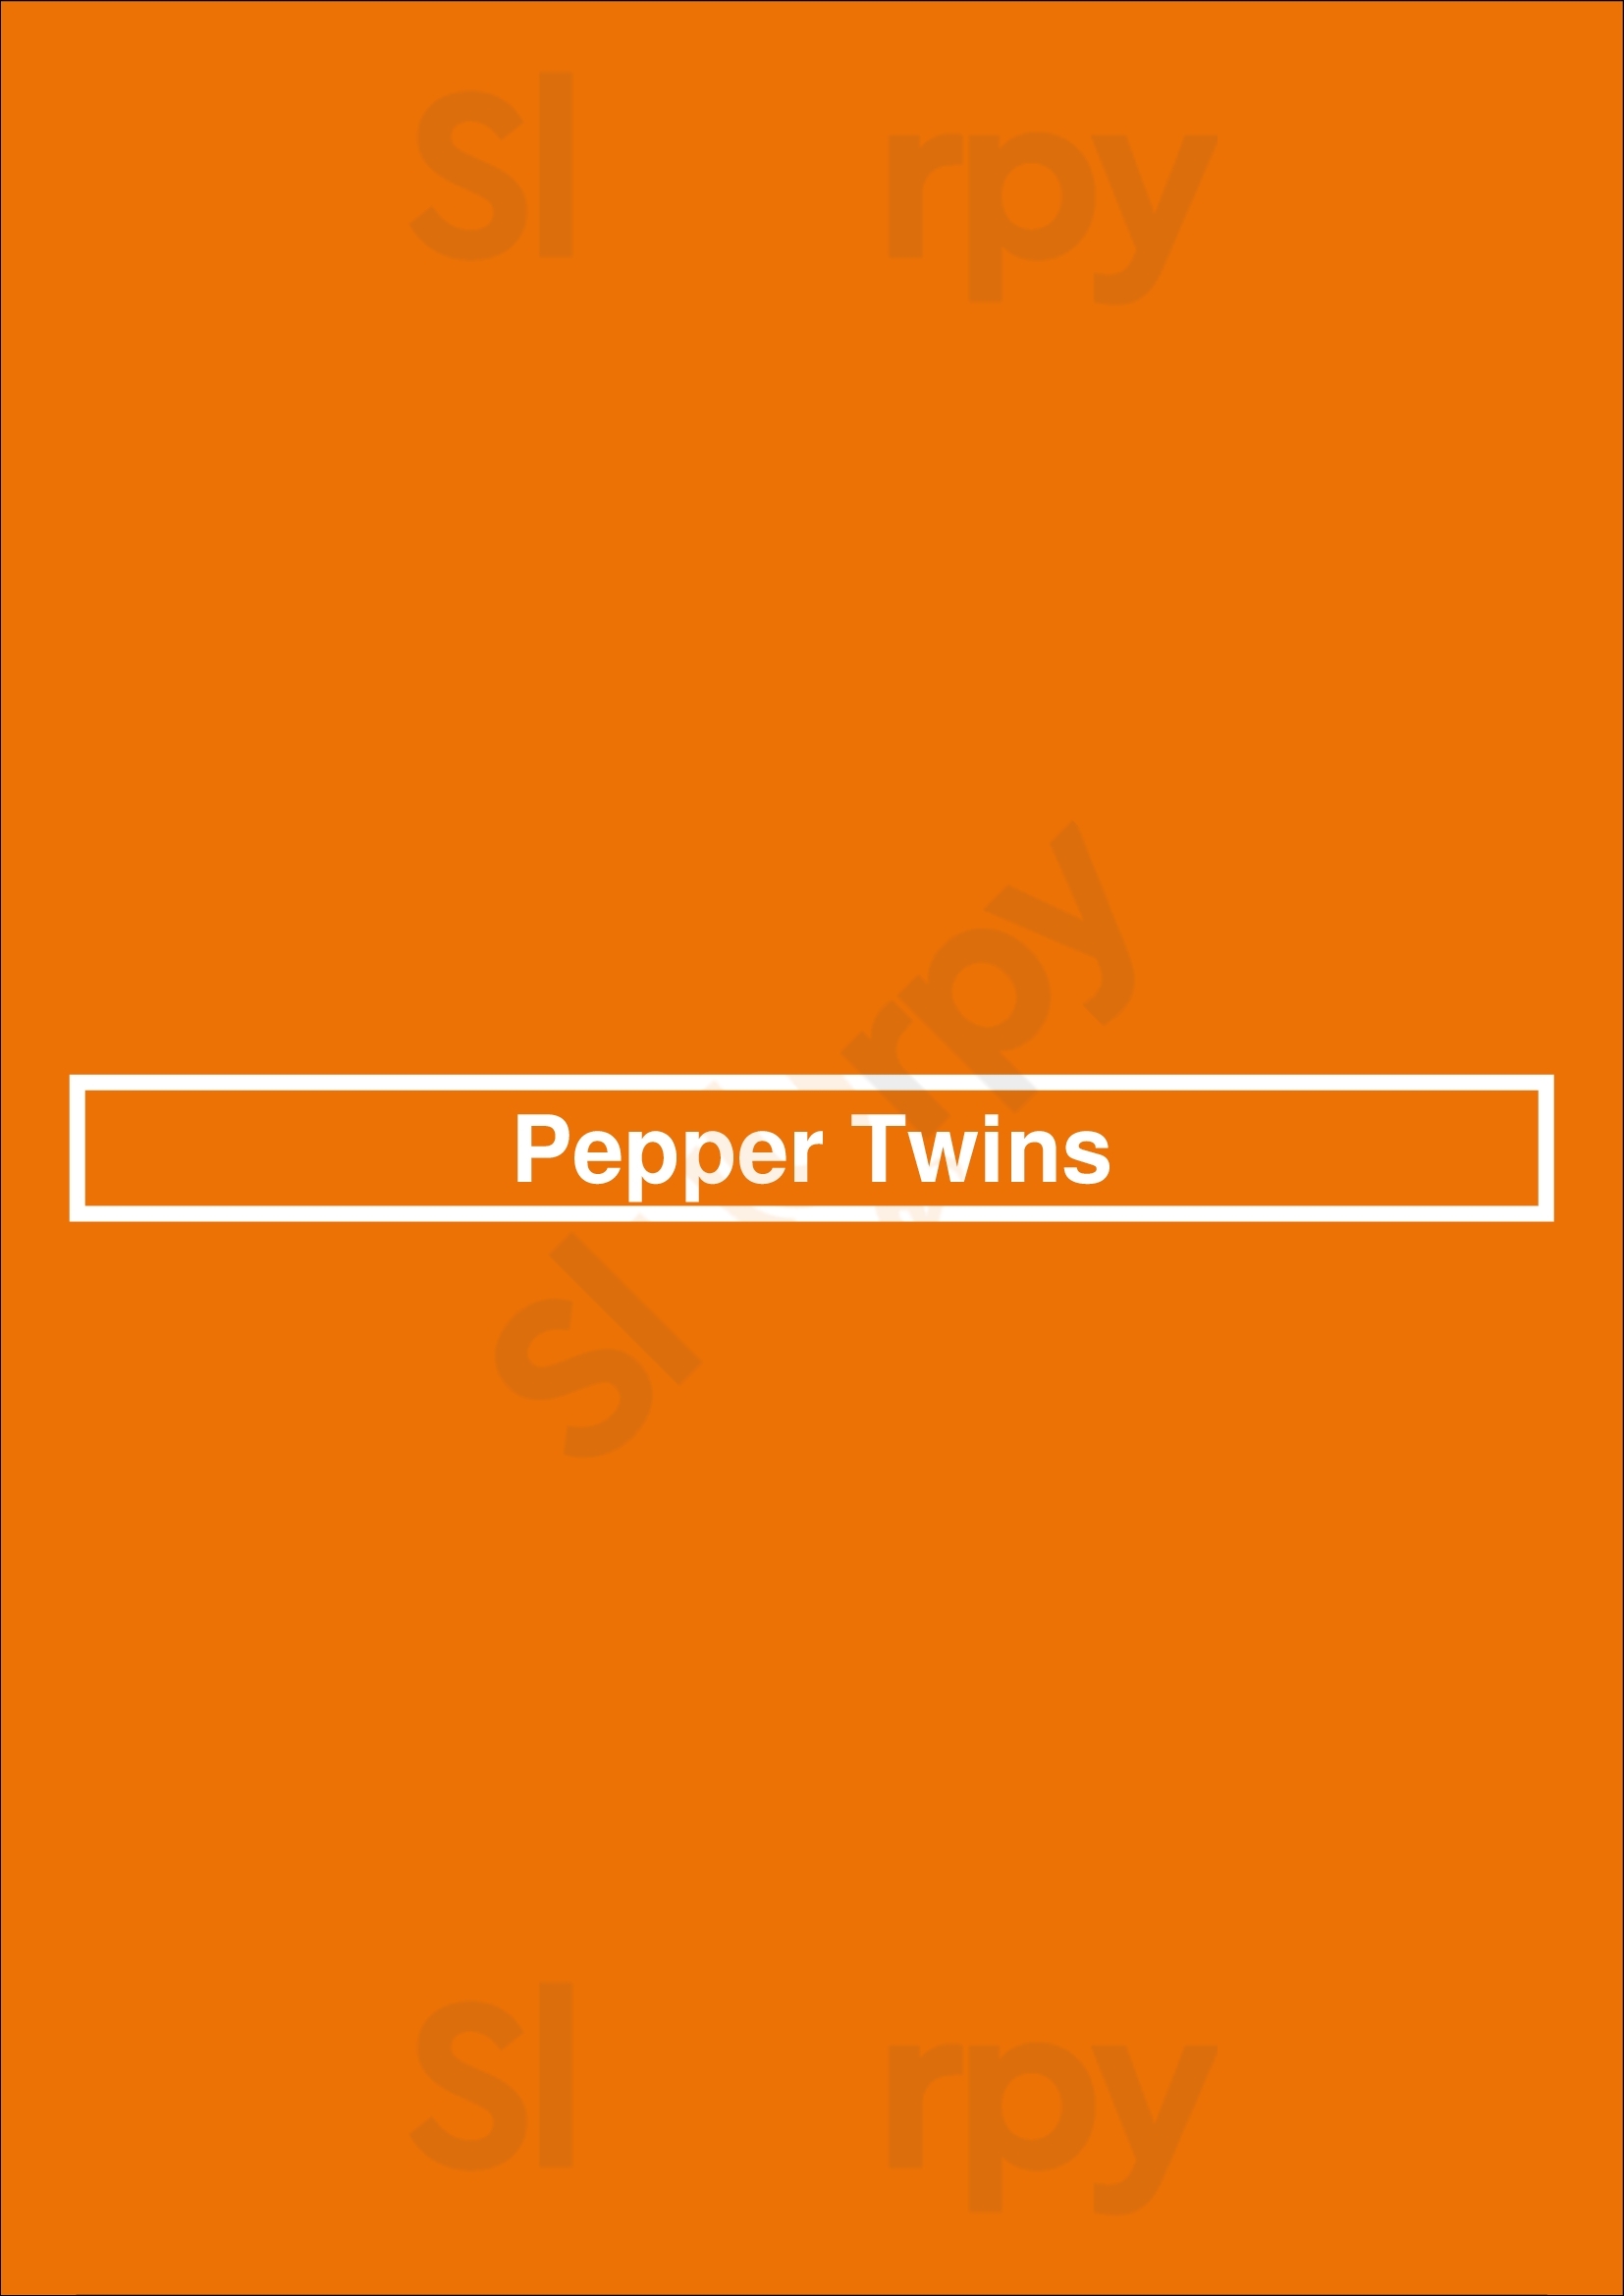 Pepper Twins Houston Menu - 1